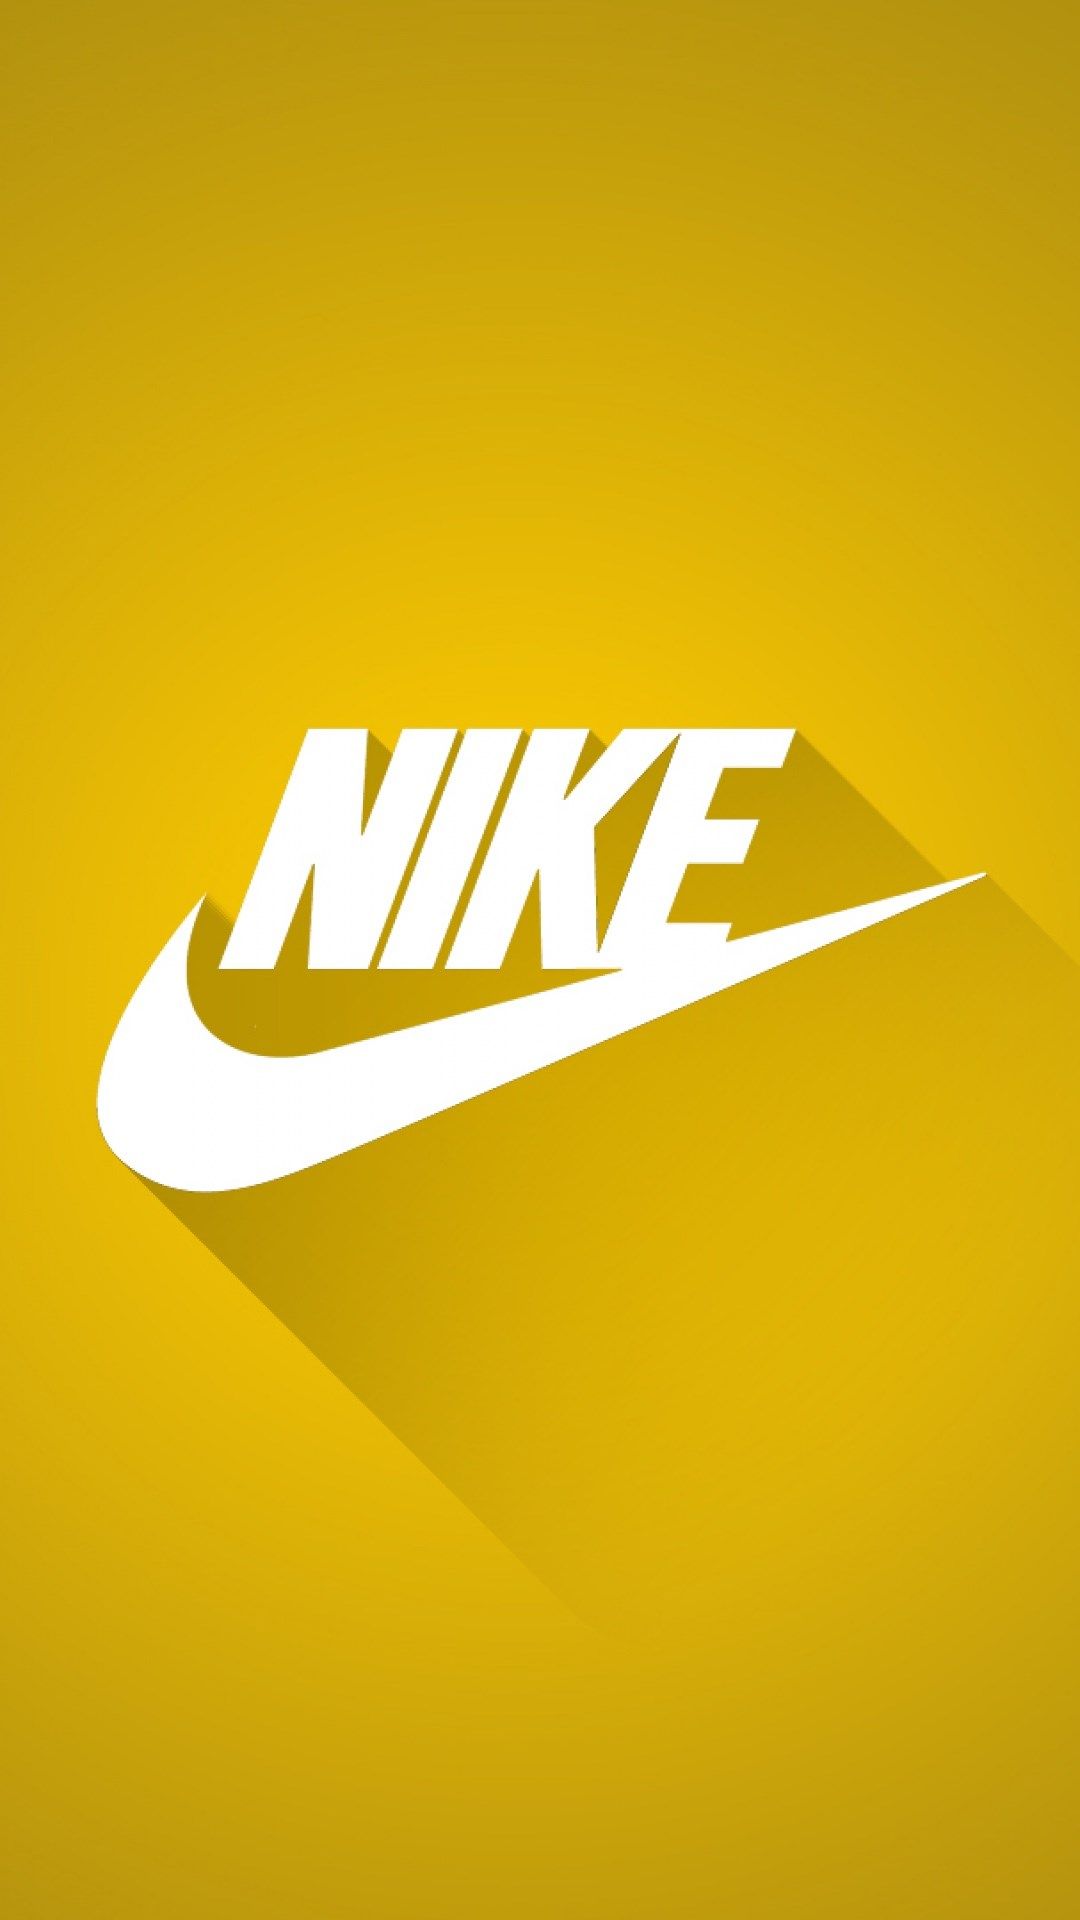 Nikeロゴ 完全無料画像検索のプリ画像 Bygmo ce9 24dhakanews Com